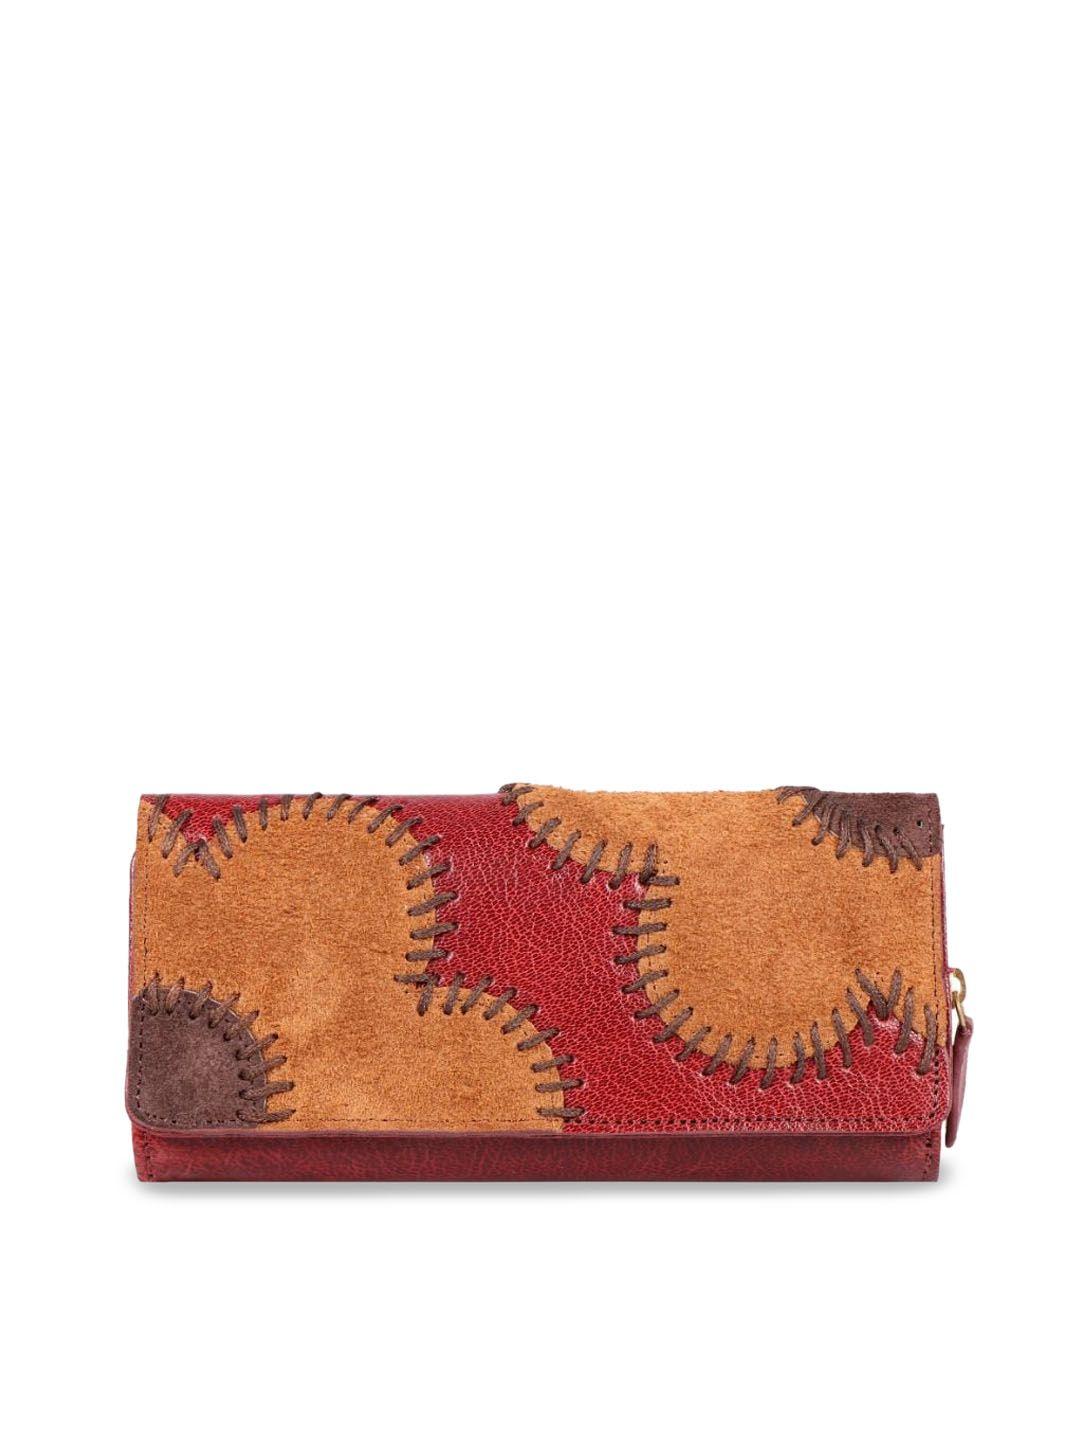 hidesign red & orange floral woven design embroidered leather envelope